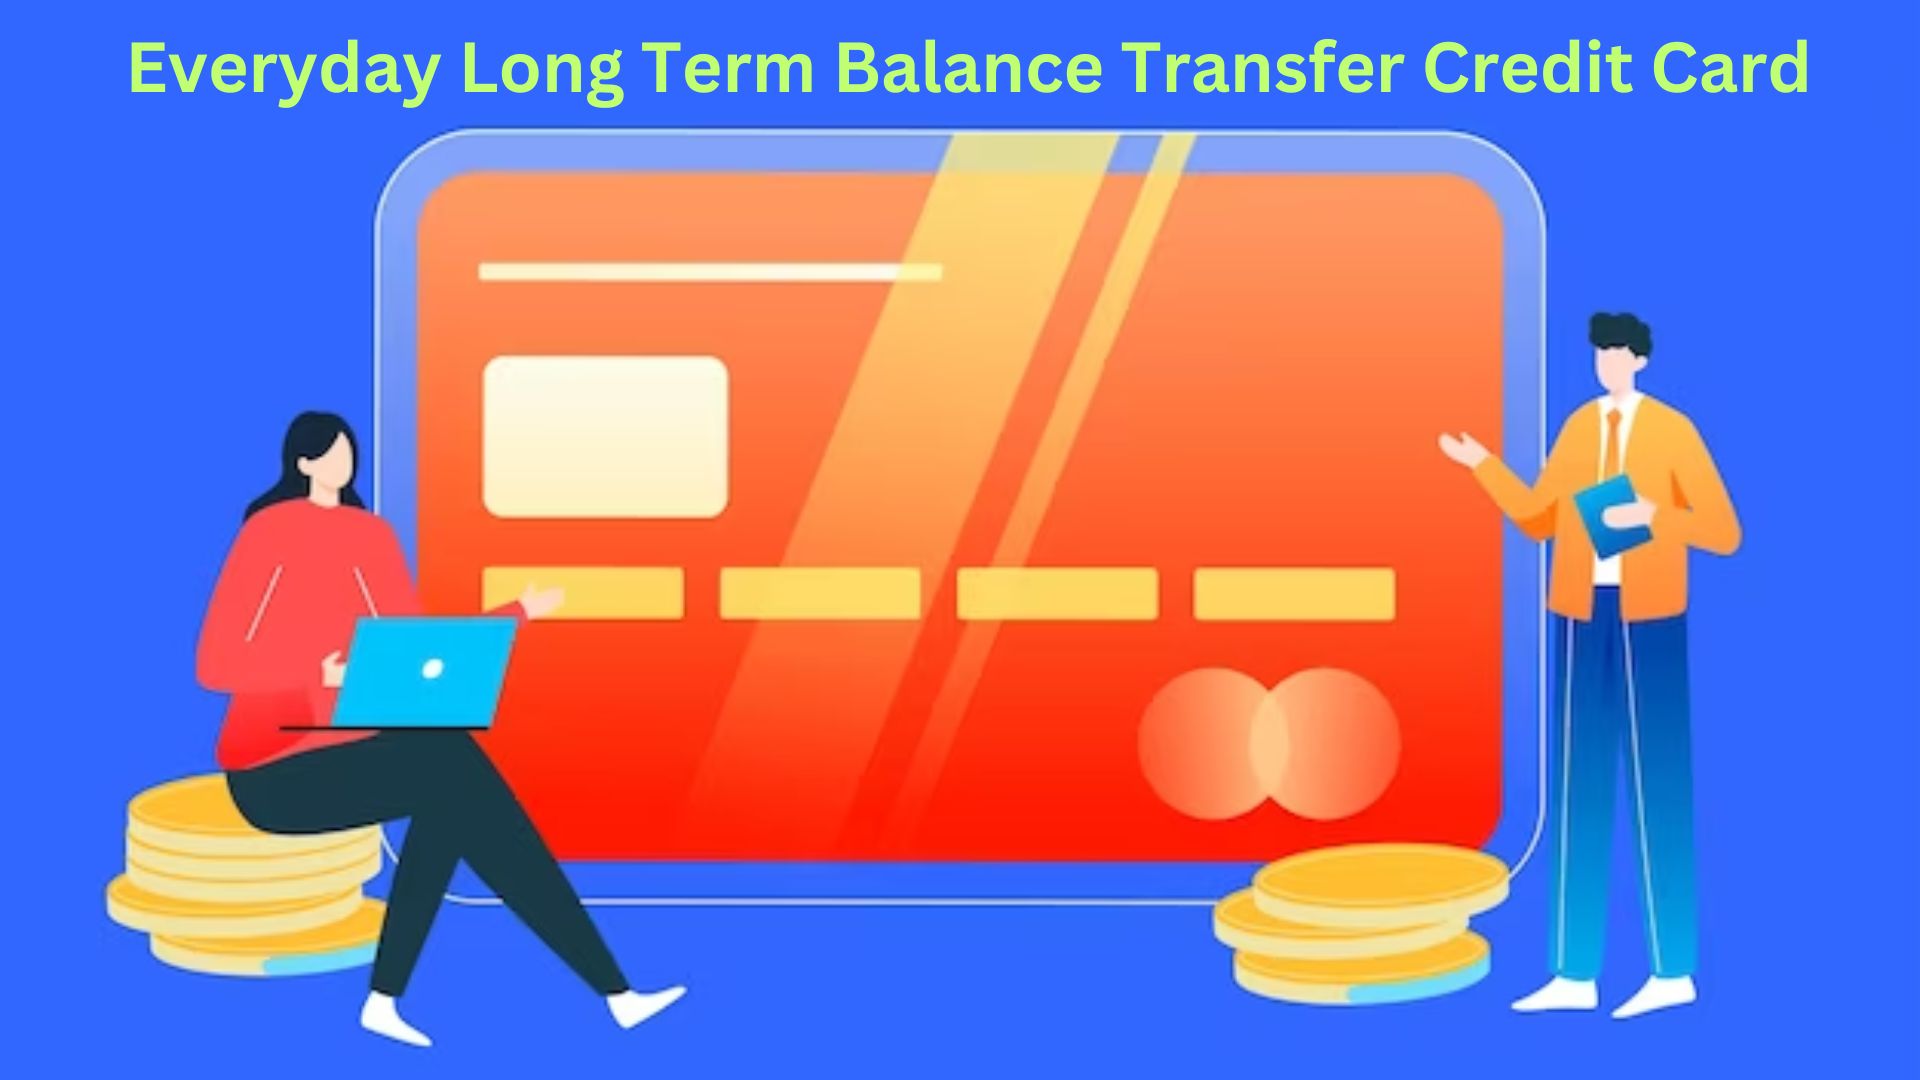 Everyday Long Term Balance Transfer Credit Card decideloan.com creditcard insurance